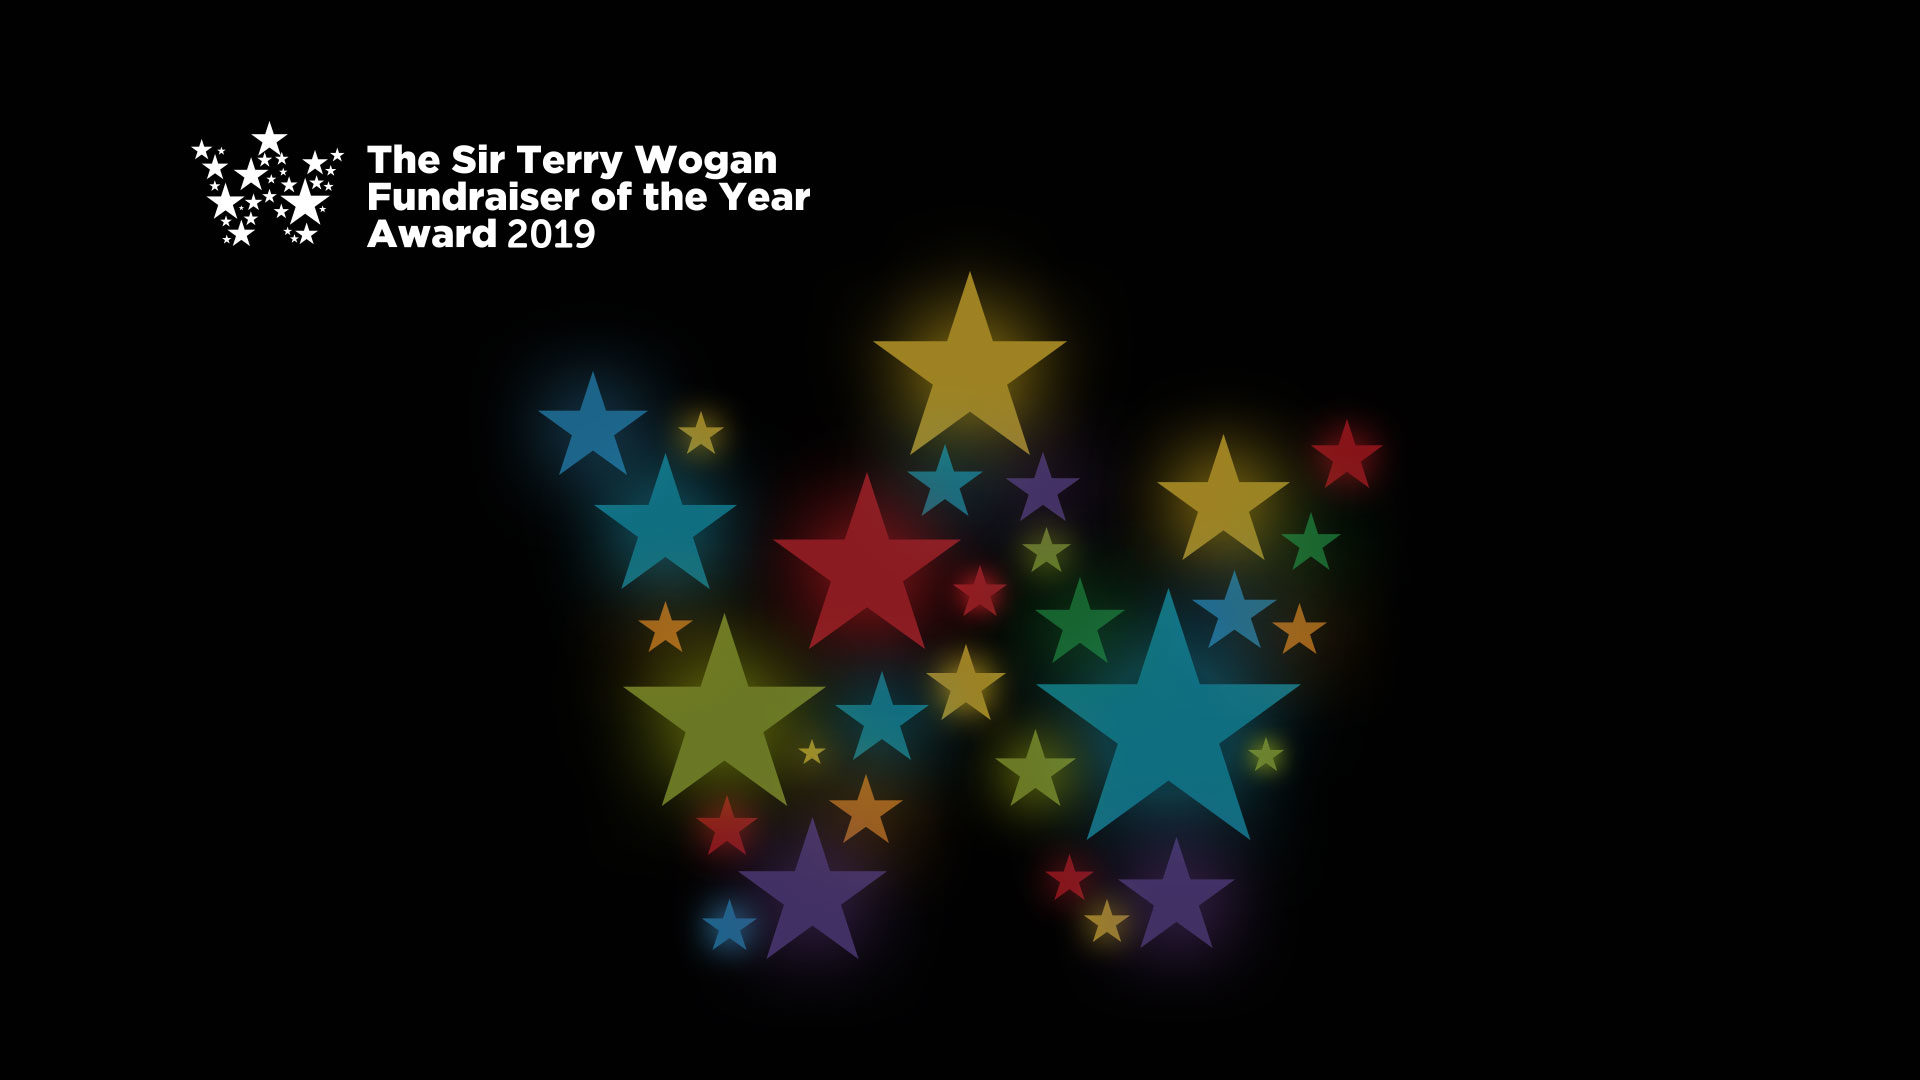 The Sir Terry Wogan Fundraiser of the Year Award logo